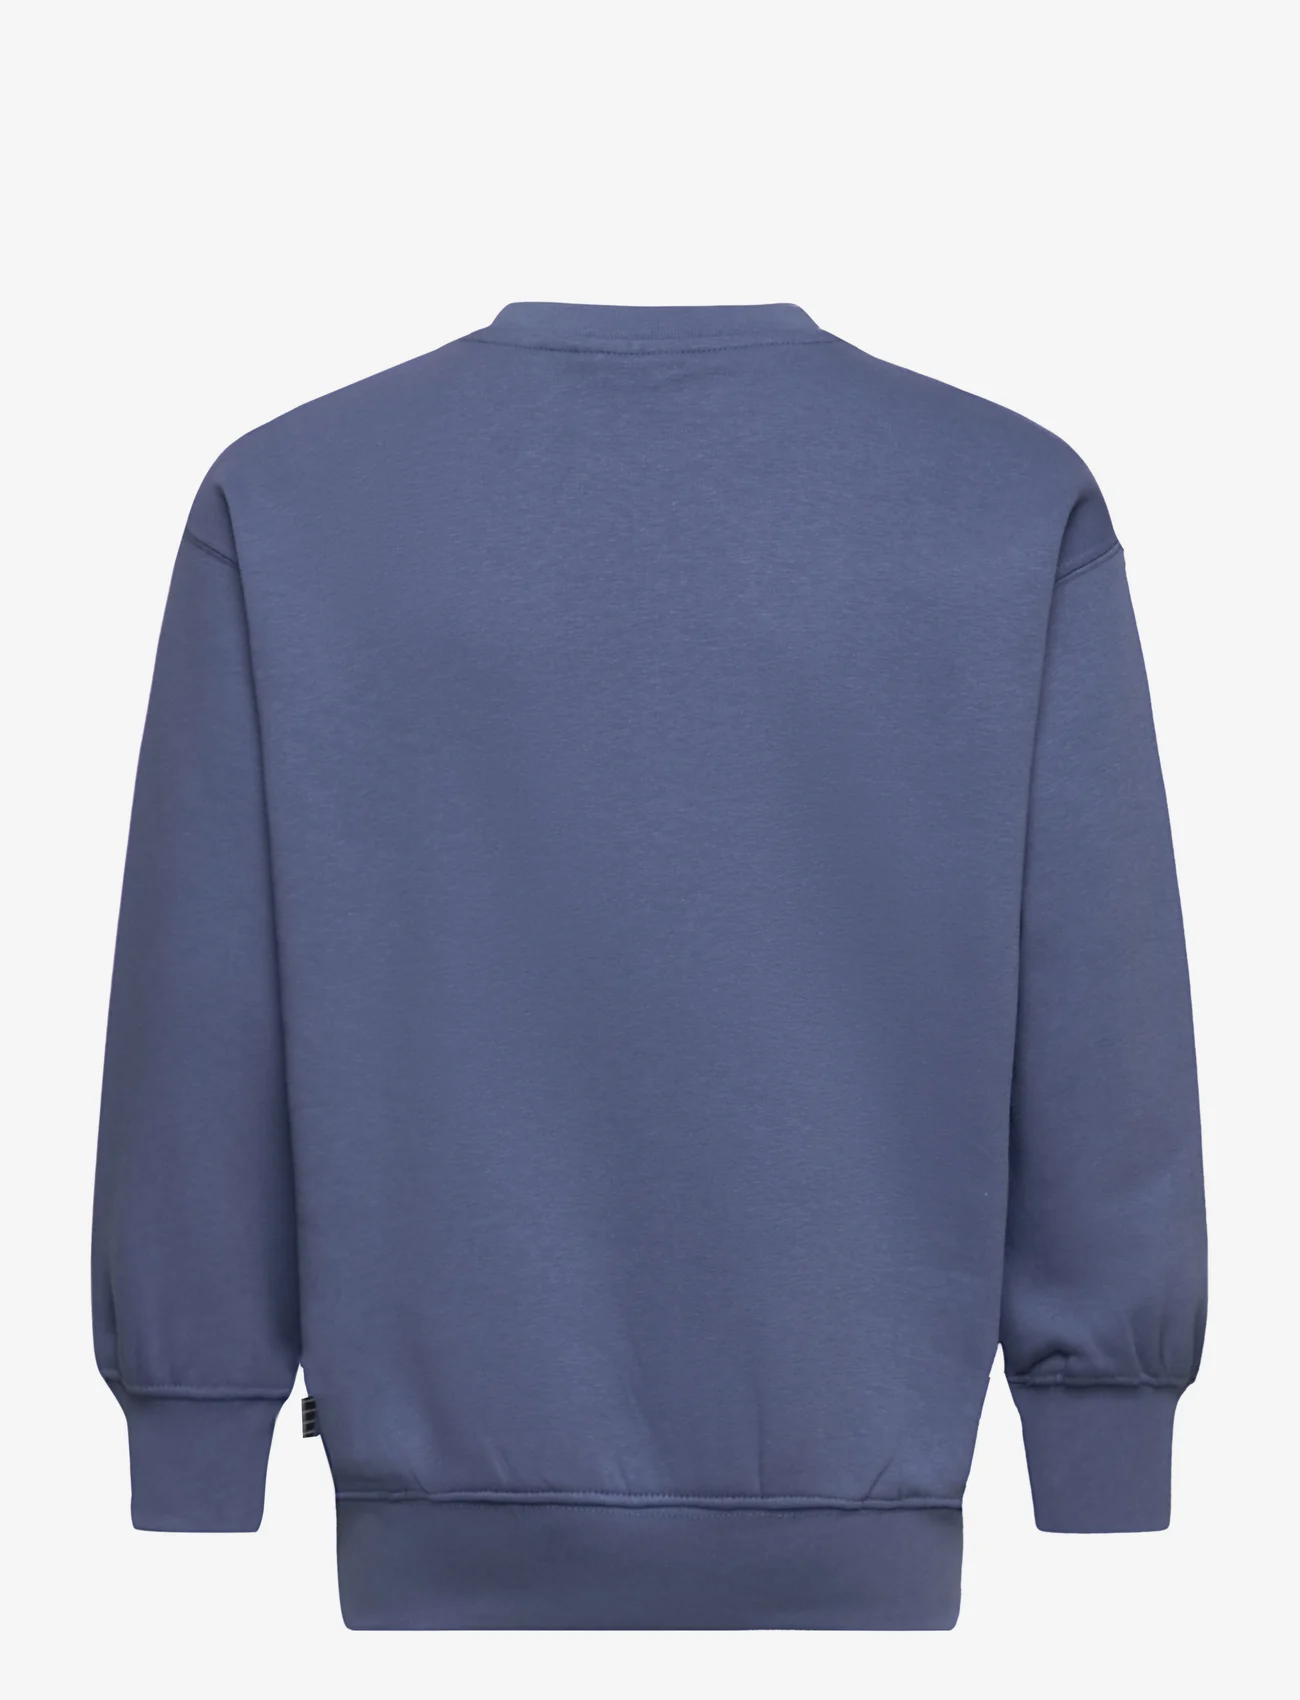 Molo - Mar - sweatshirts - moonlight blue - 1